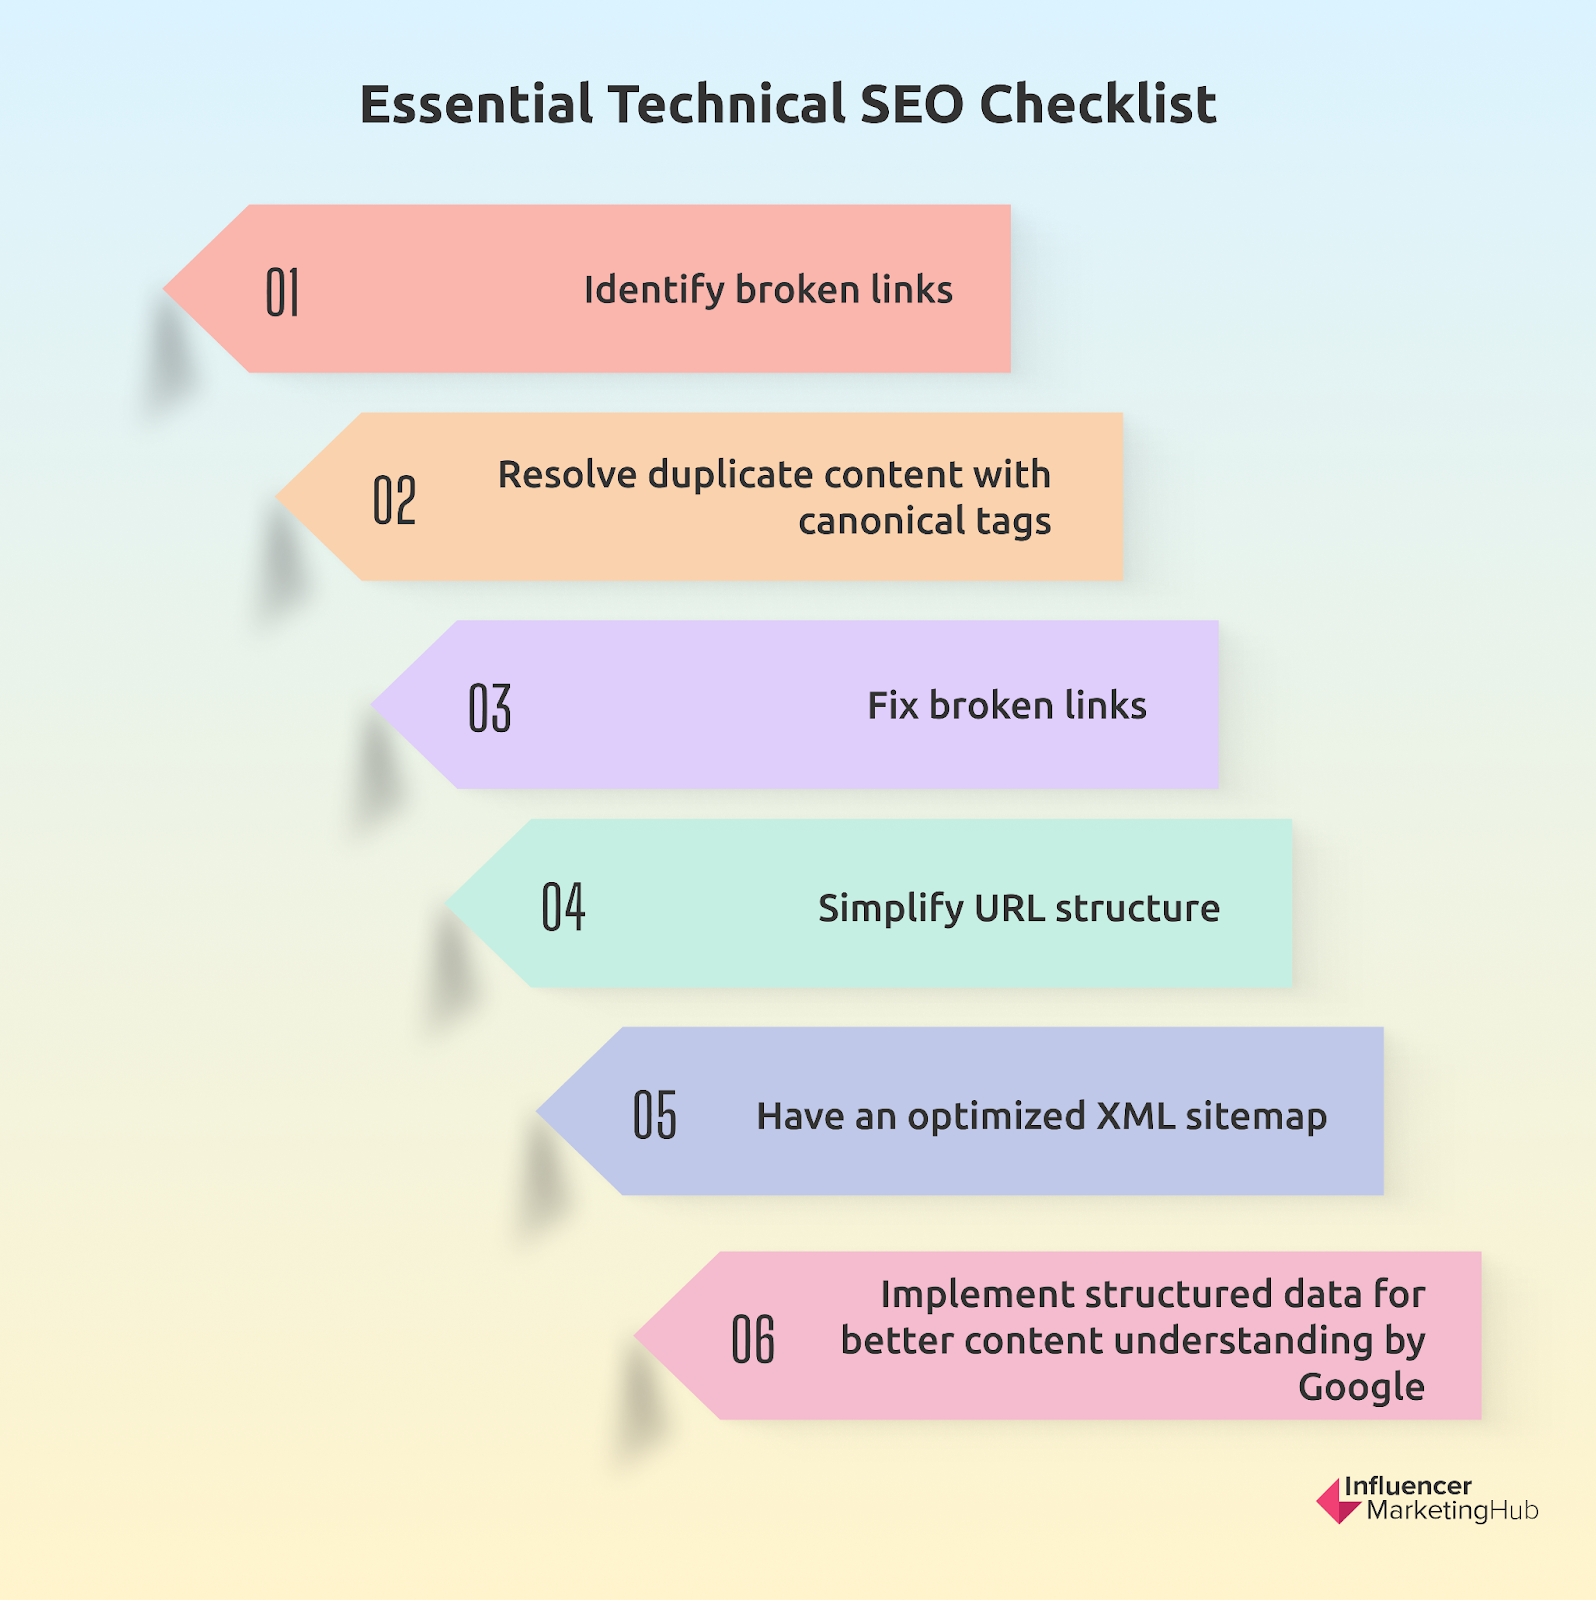 Essential Technical SEO Checklist